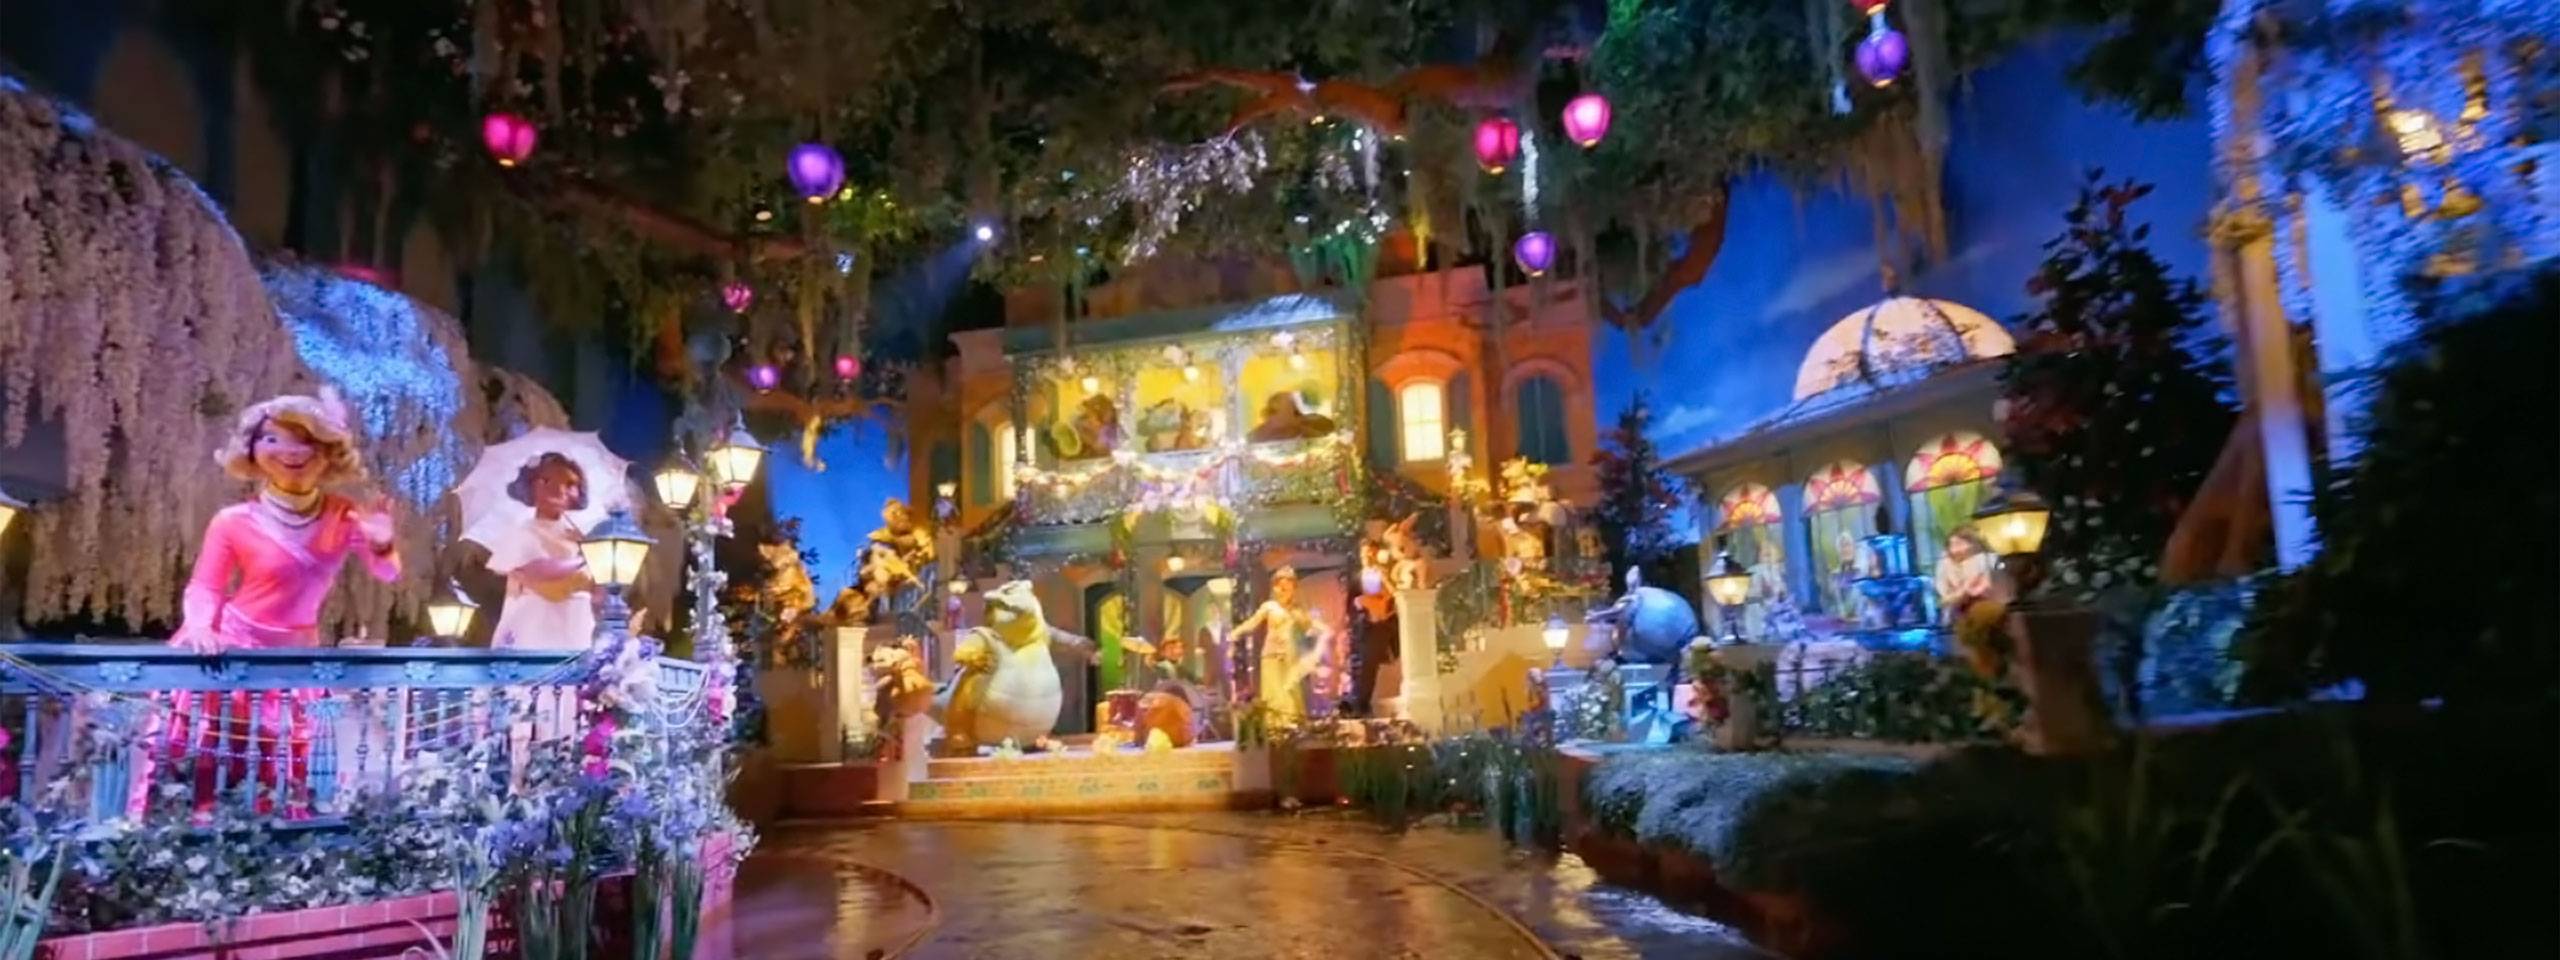 First Detailed Look Inside Tiana's Bayou Adventure at Walt Disney World